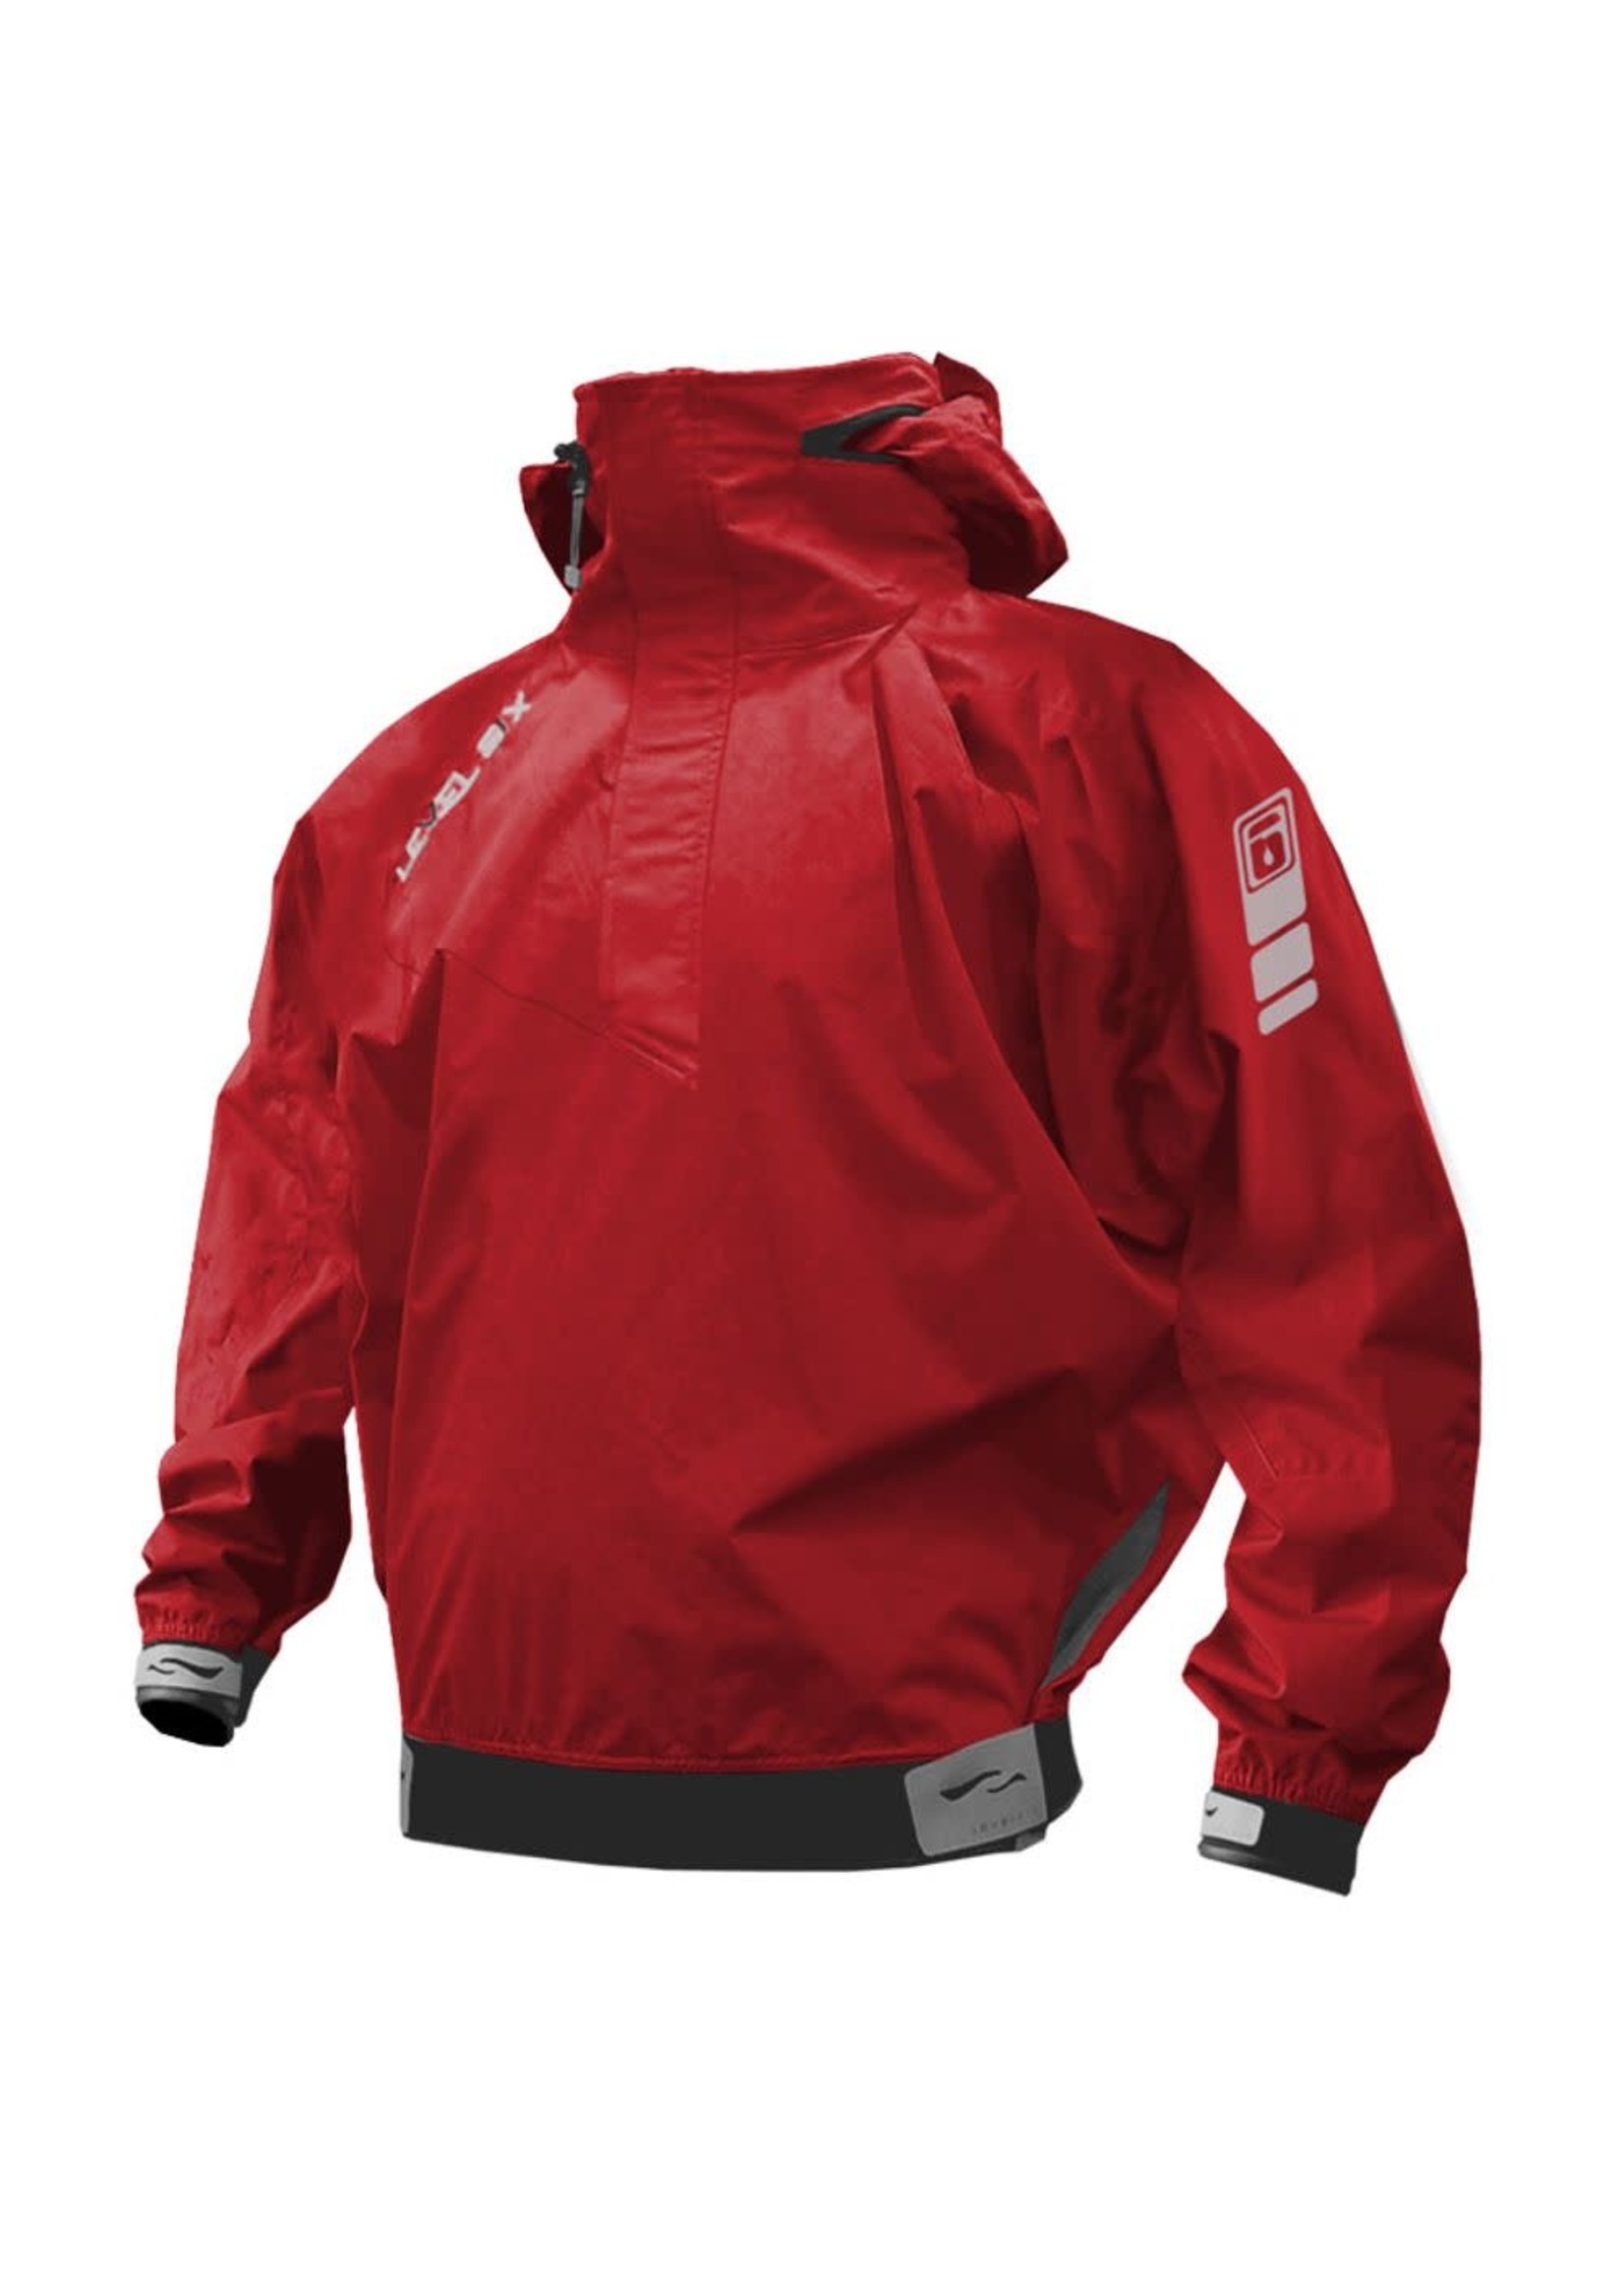 Level Six Level Six Bonavista Semi Dry Jacket Olympic Red X-Small